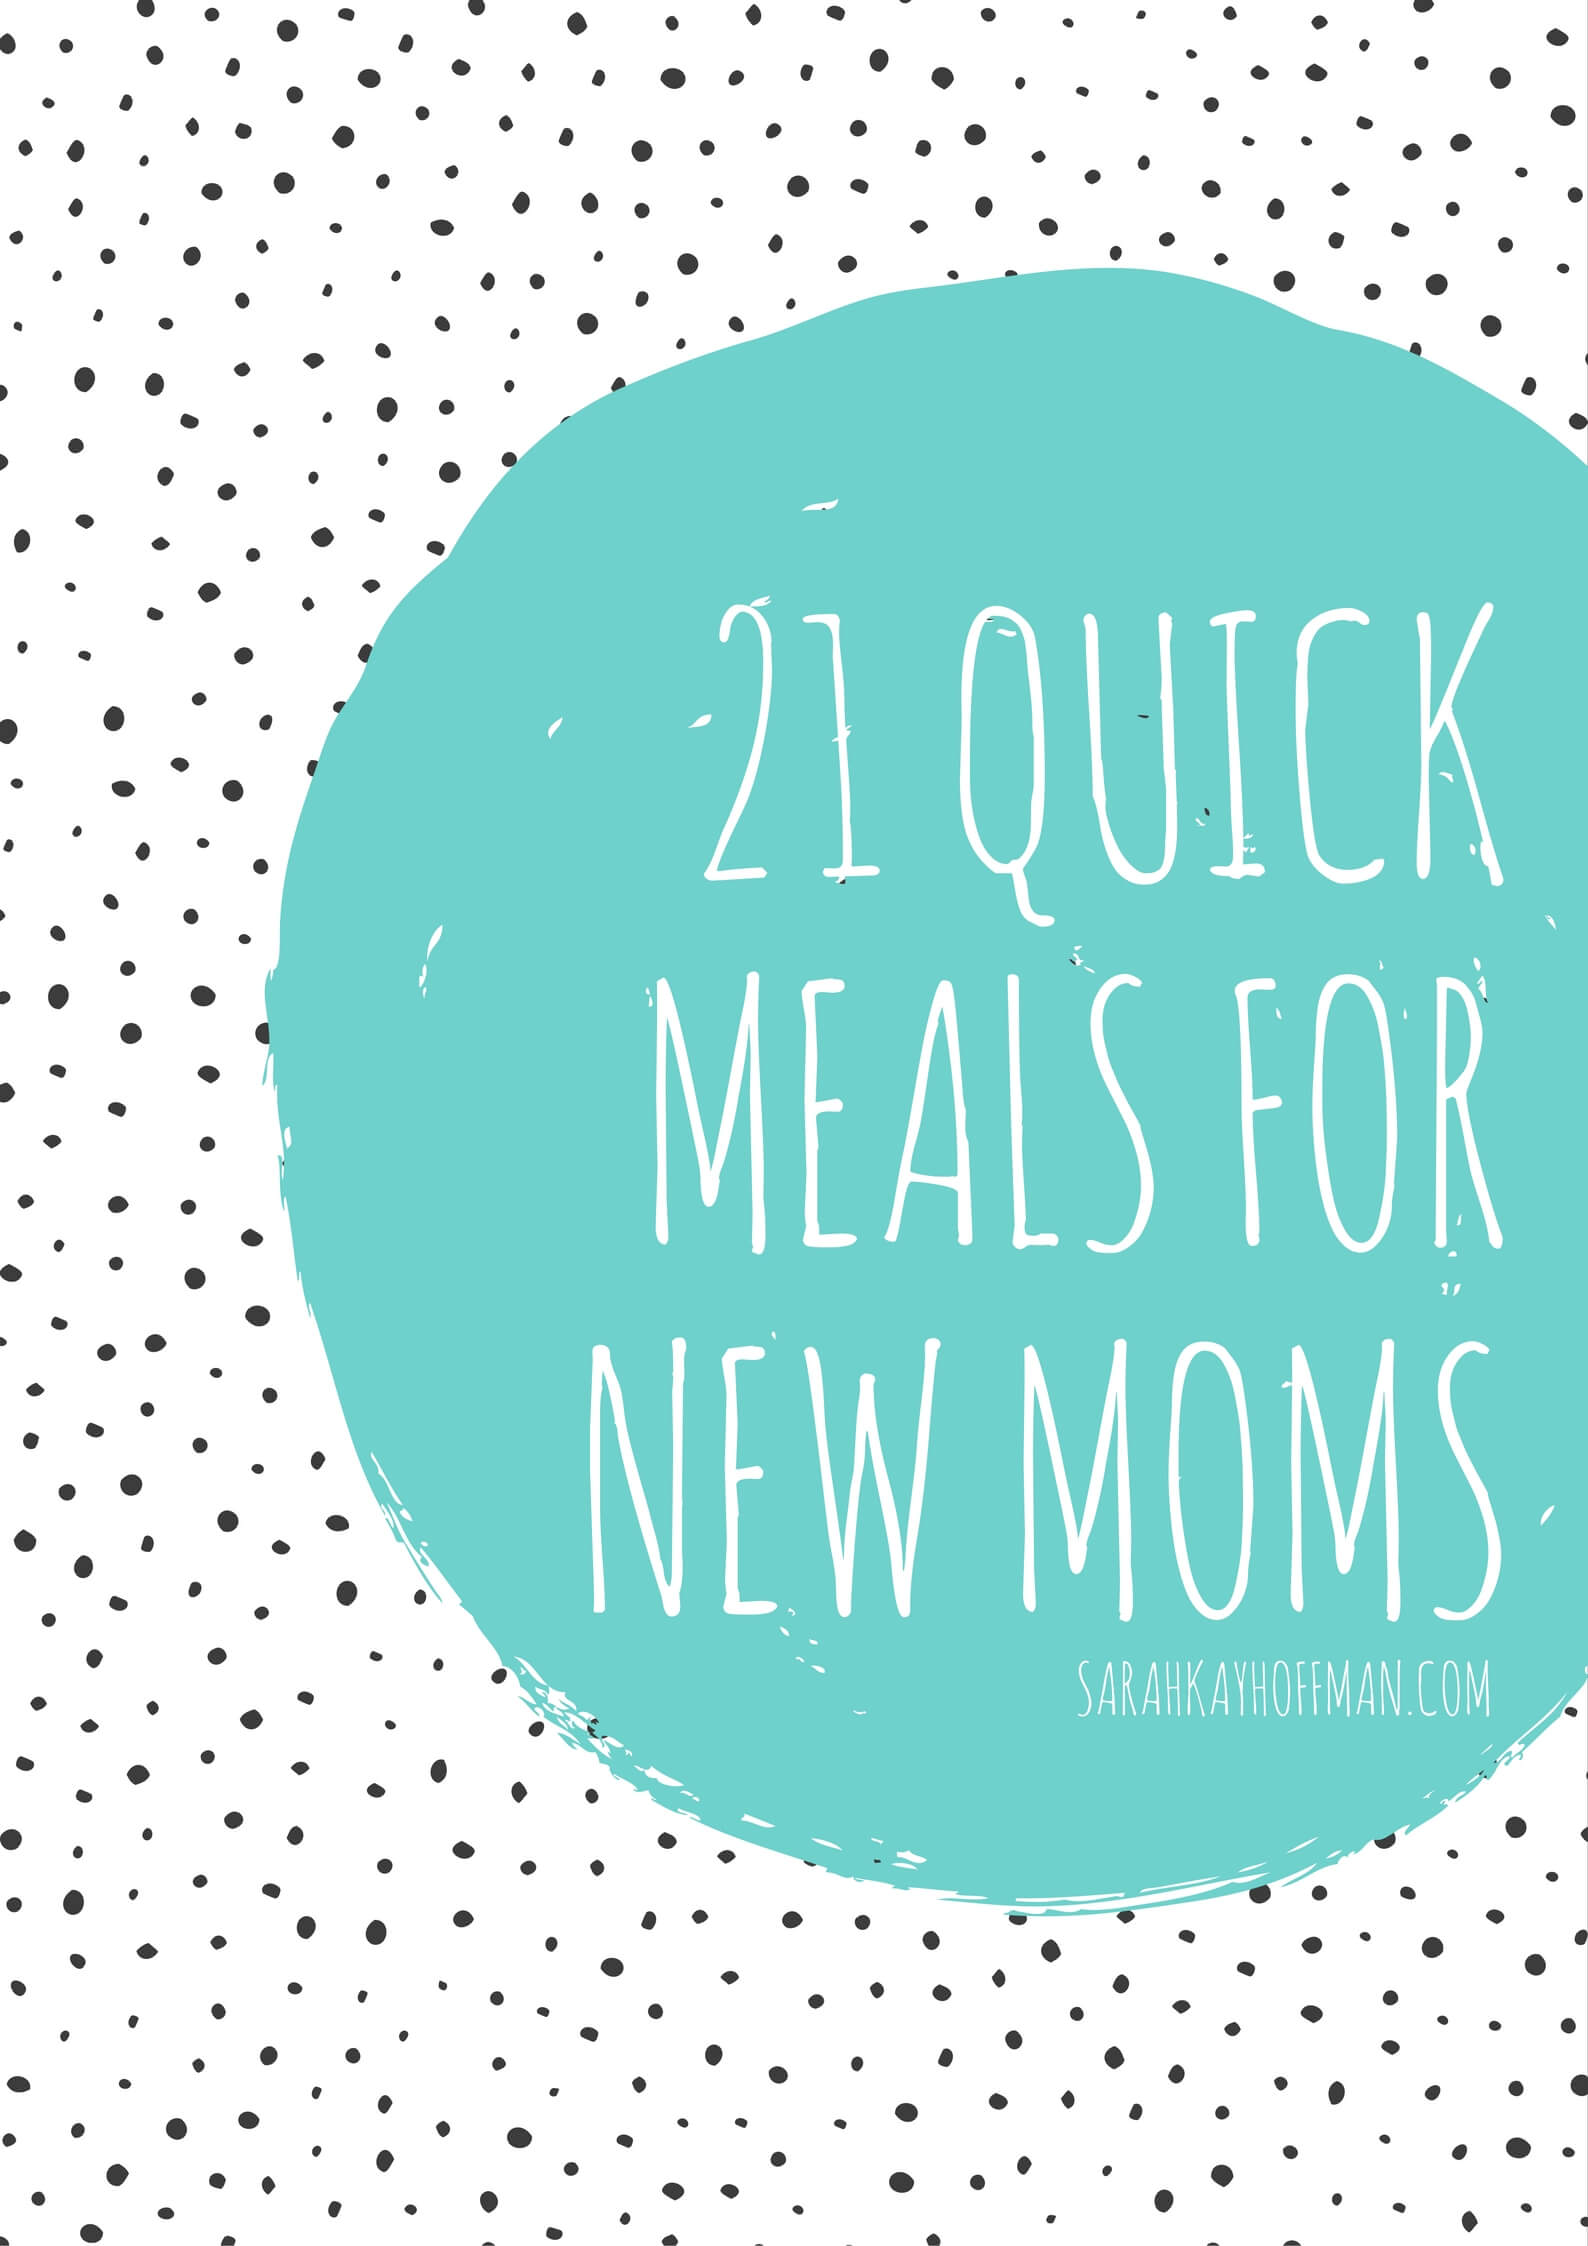 21 Quick Meals for New Moms sarahkayhoffman.com Organic Recipes#motherhood #healthyliving #mealprep #recipes #healthcoach